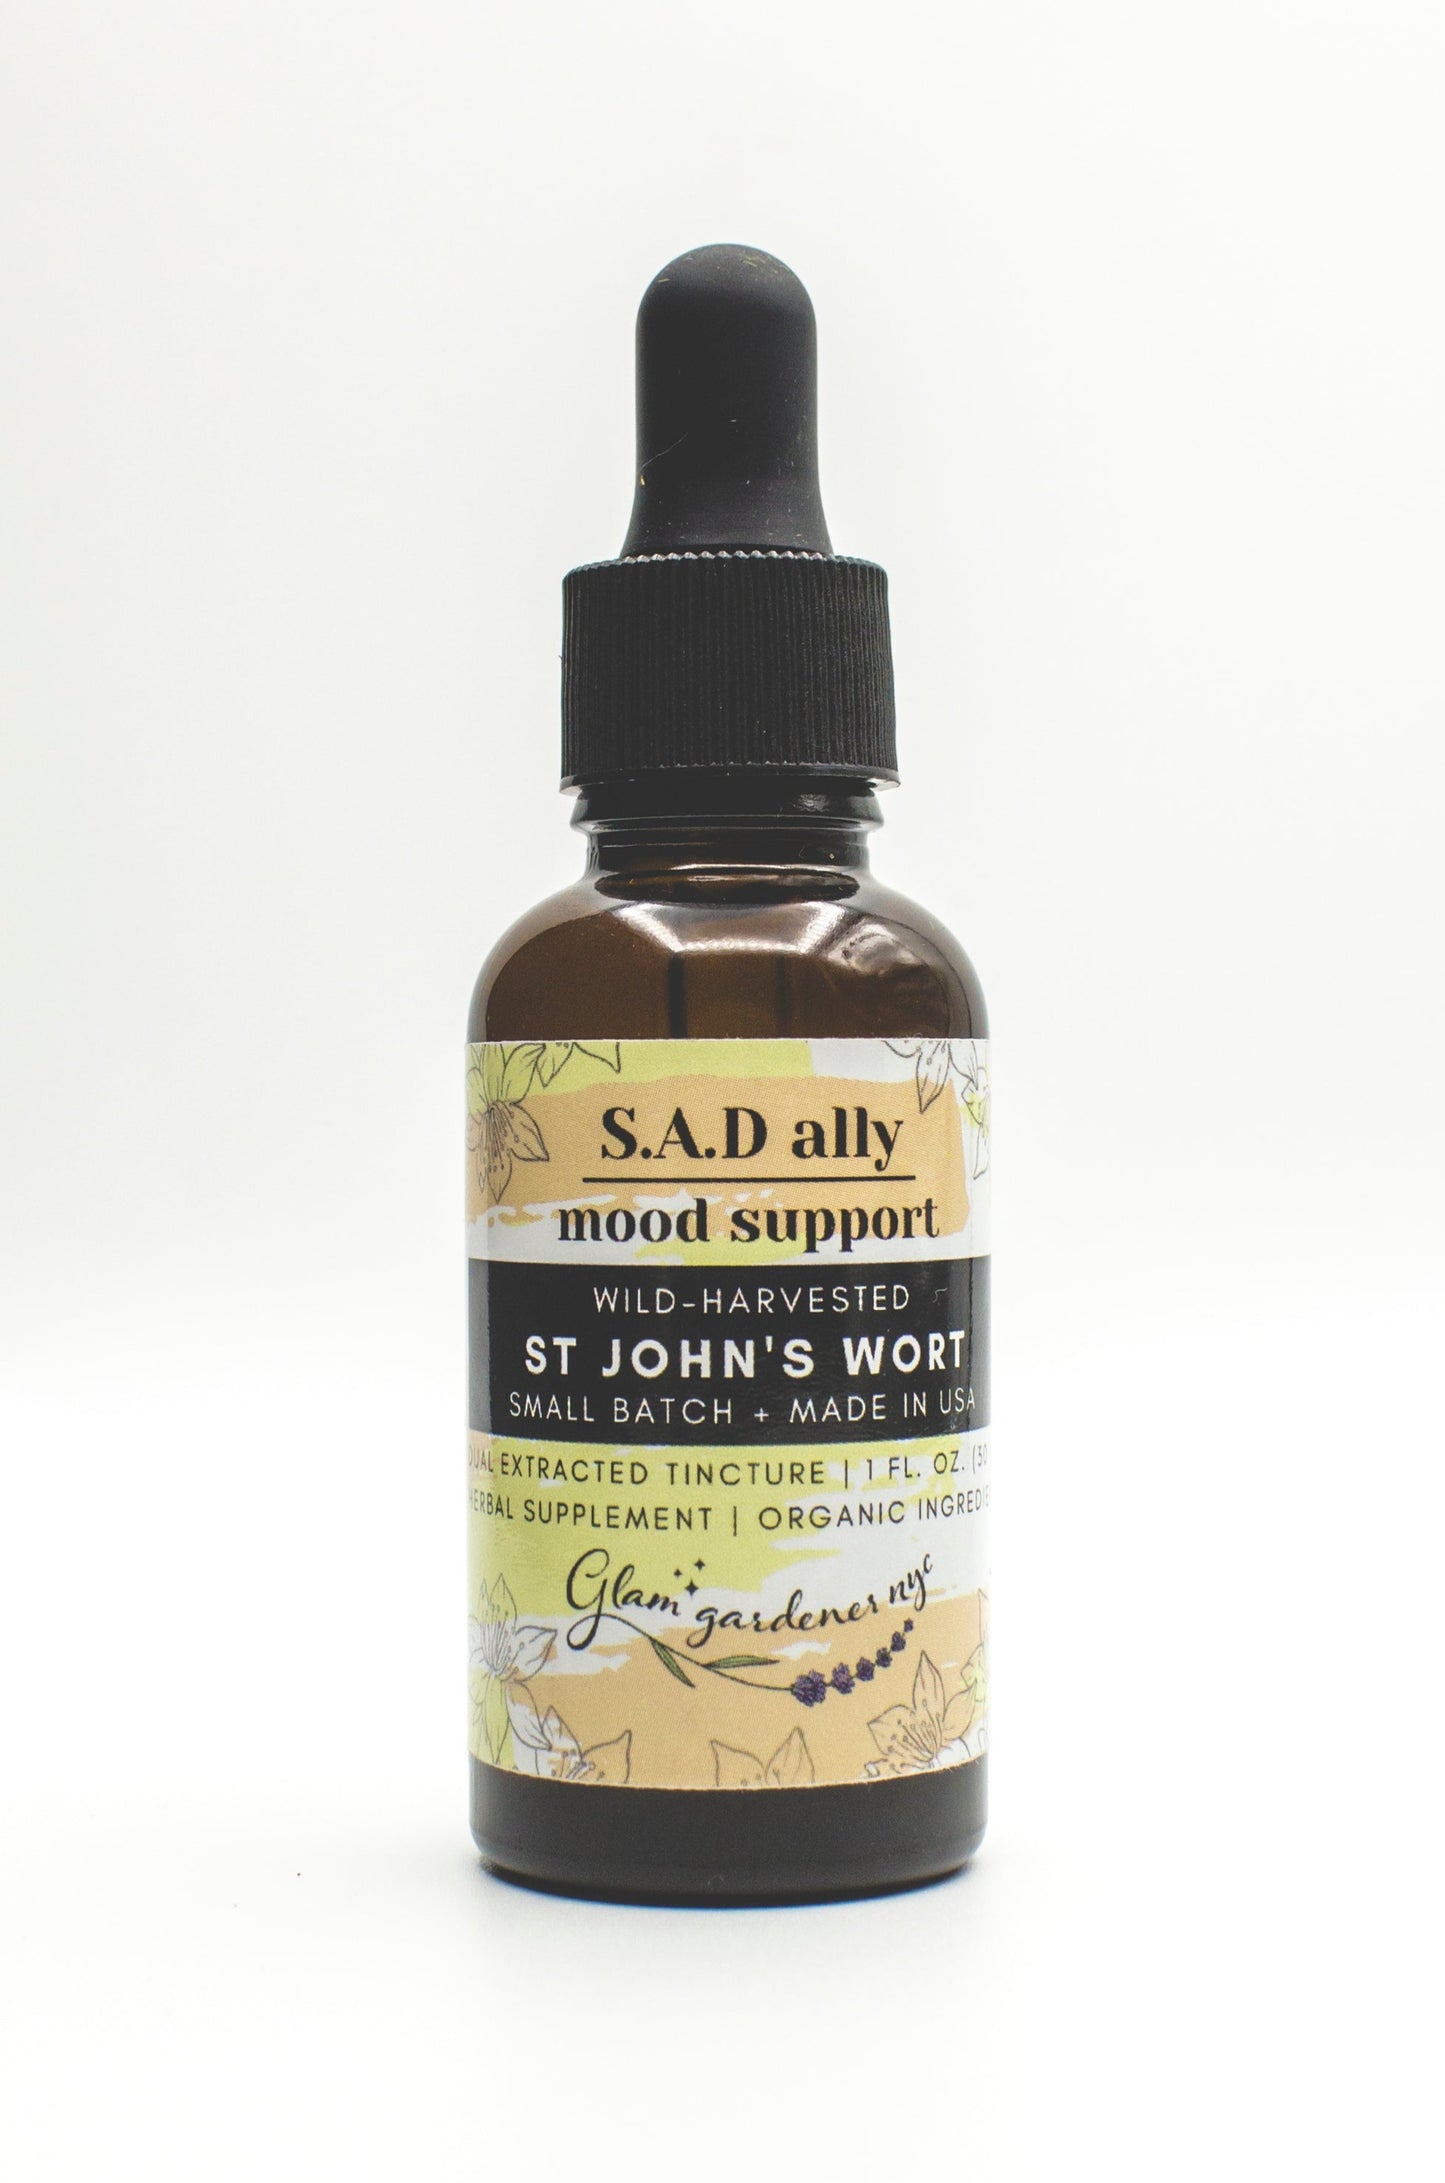 St. John's Wort tincture (seasonal depression ally + mood booster)